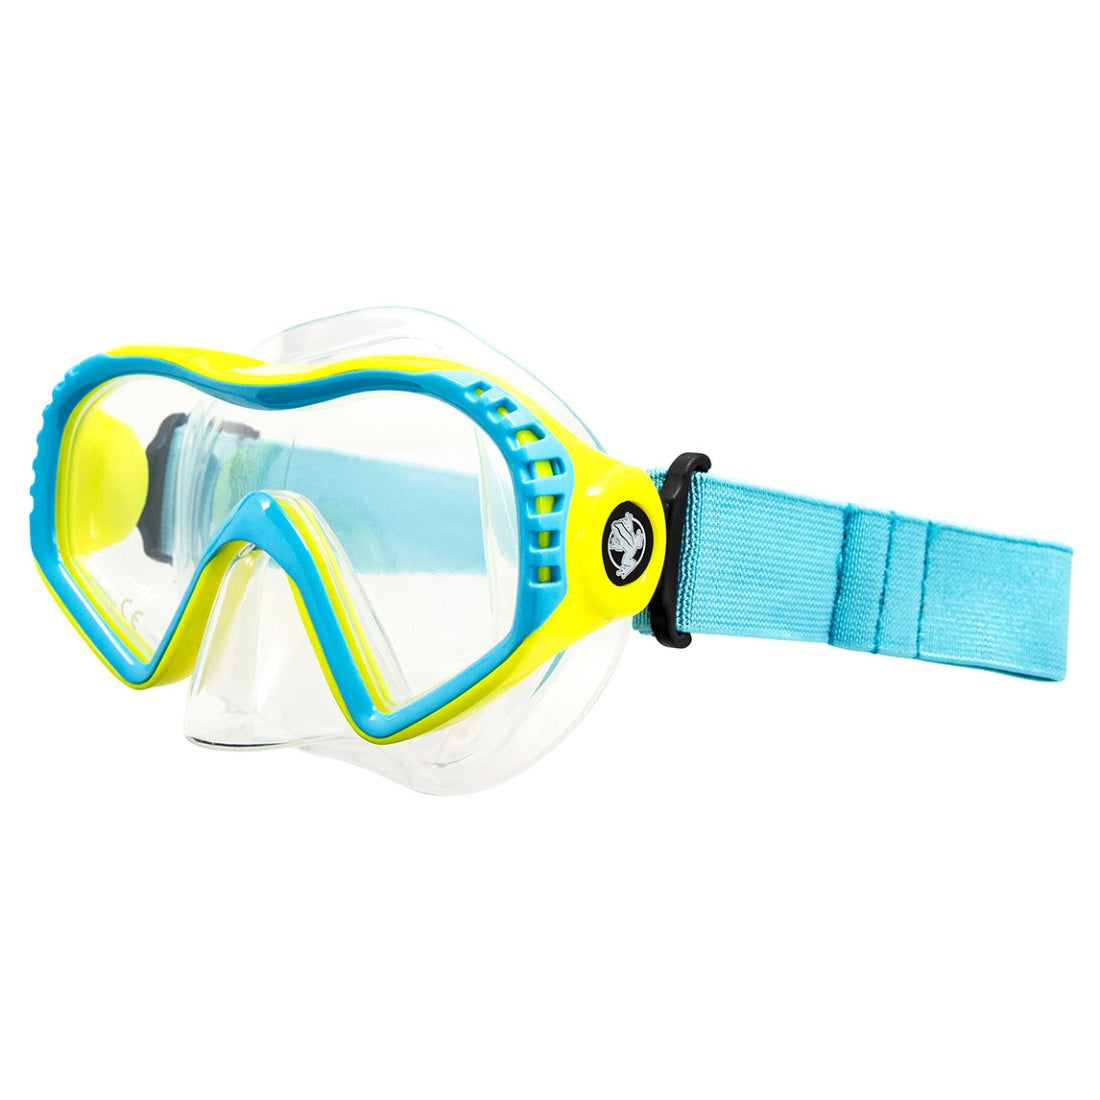 AKONA Joey Kids Snorkeling Mask